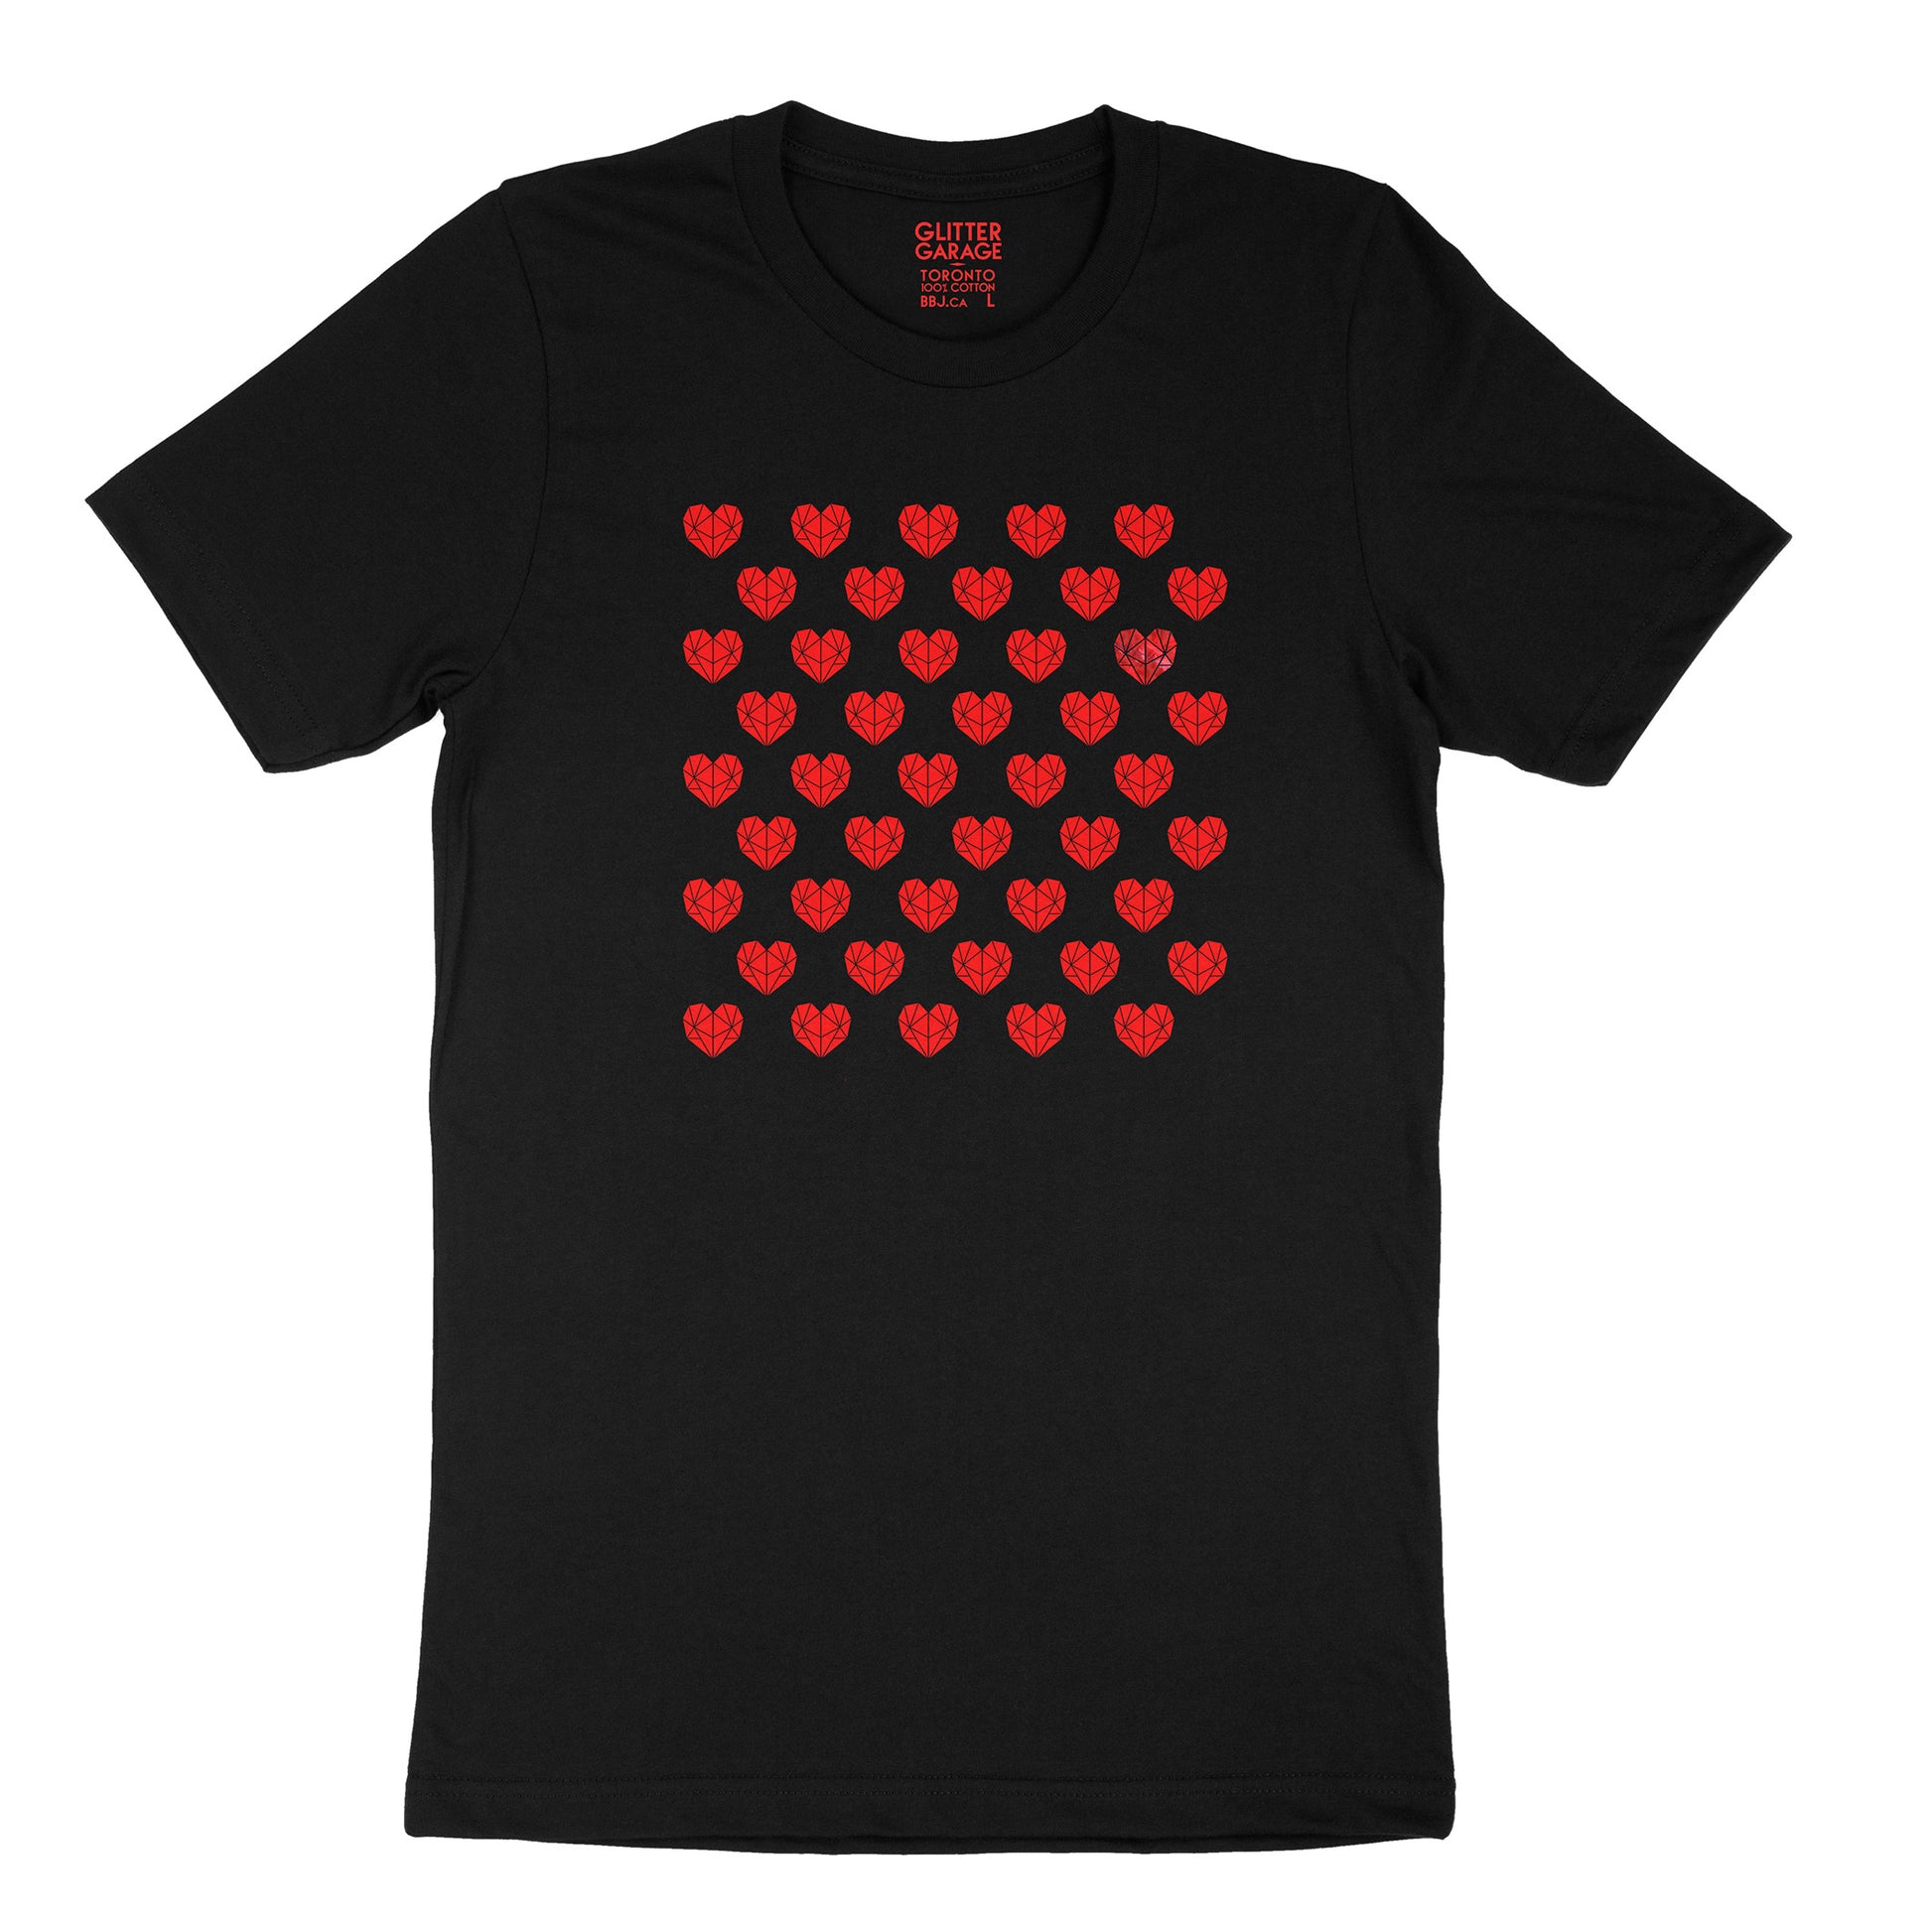 Many Hearts customizable tee - black unisex tee with 55 hearts  - red matte, metallic by BBJ / Glitter Garage